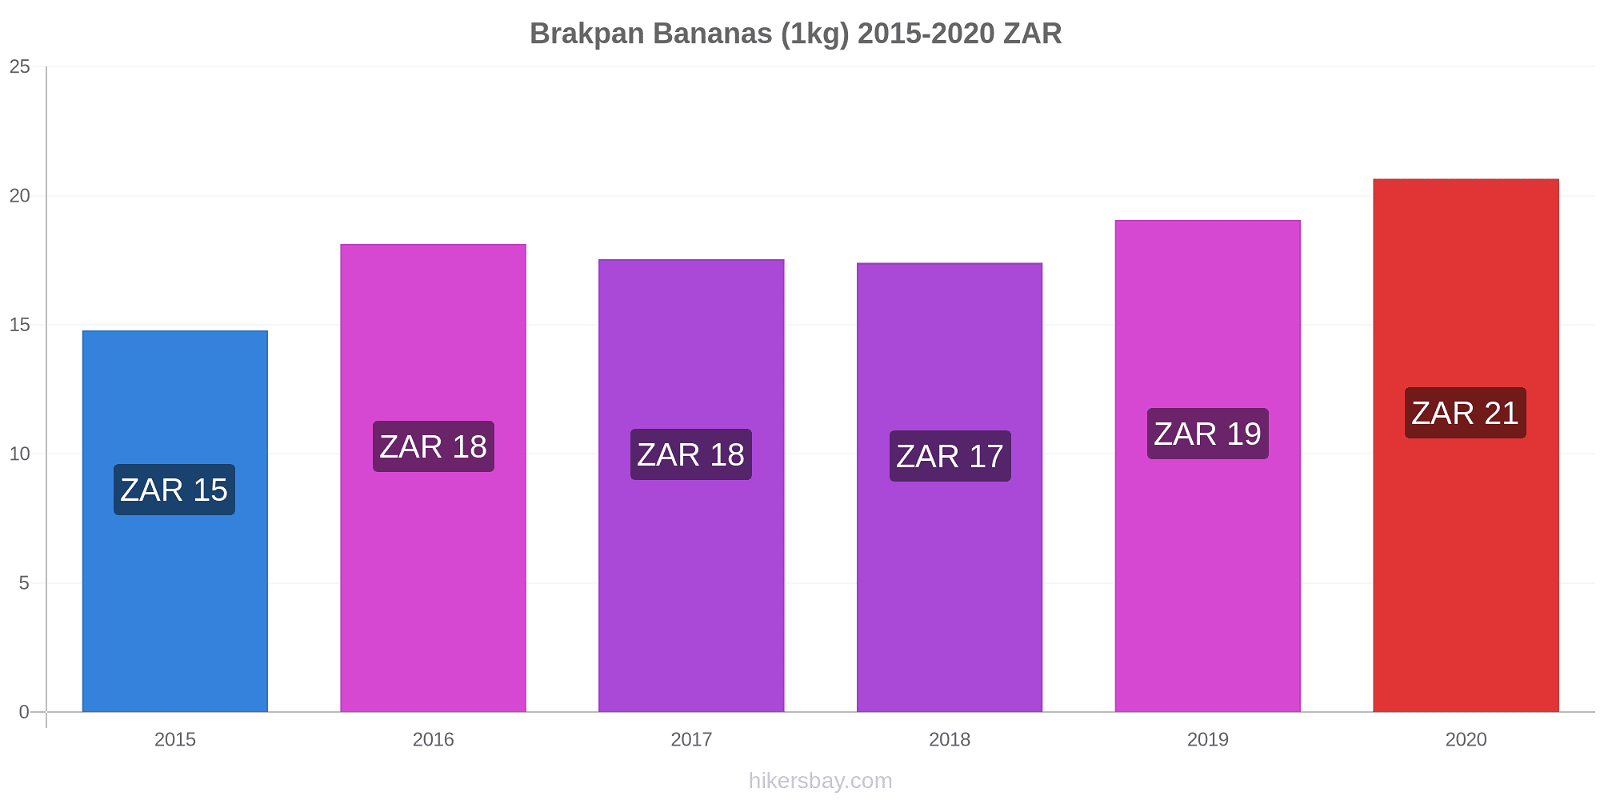 Brakpan price changes Bananas (1kg) hikersbay.com